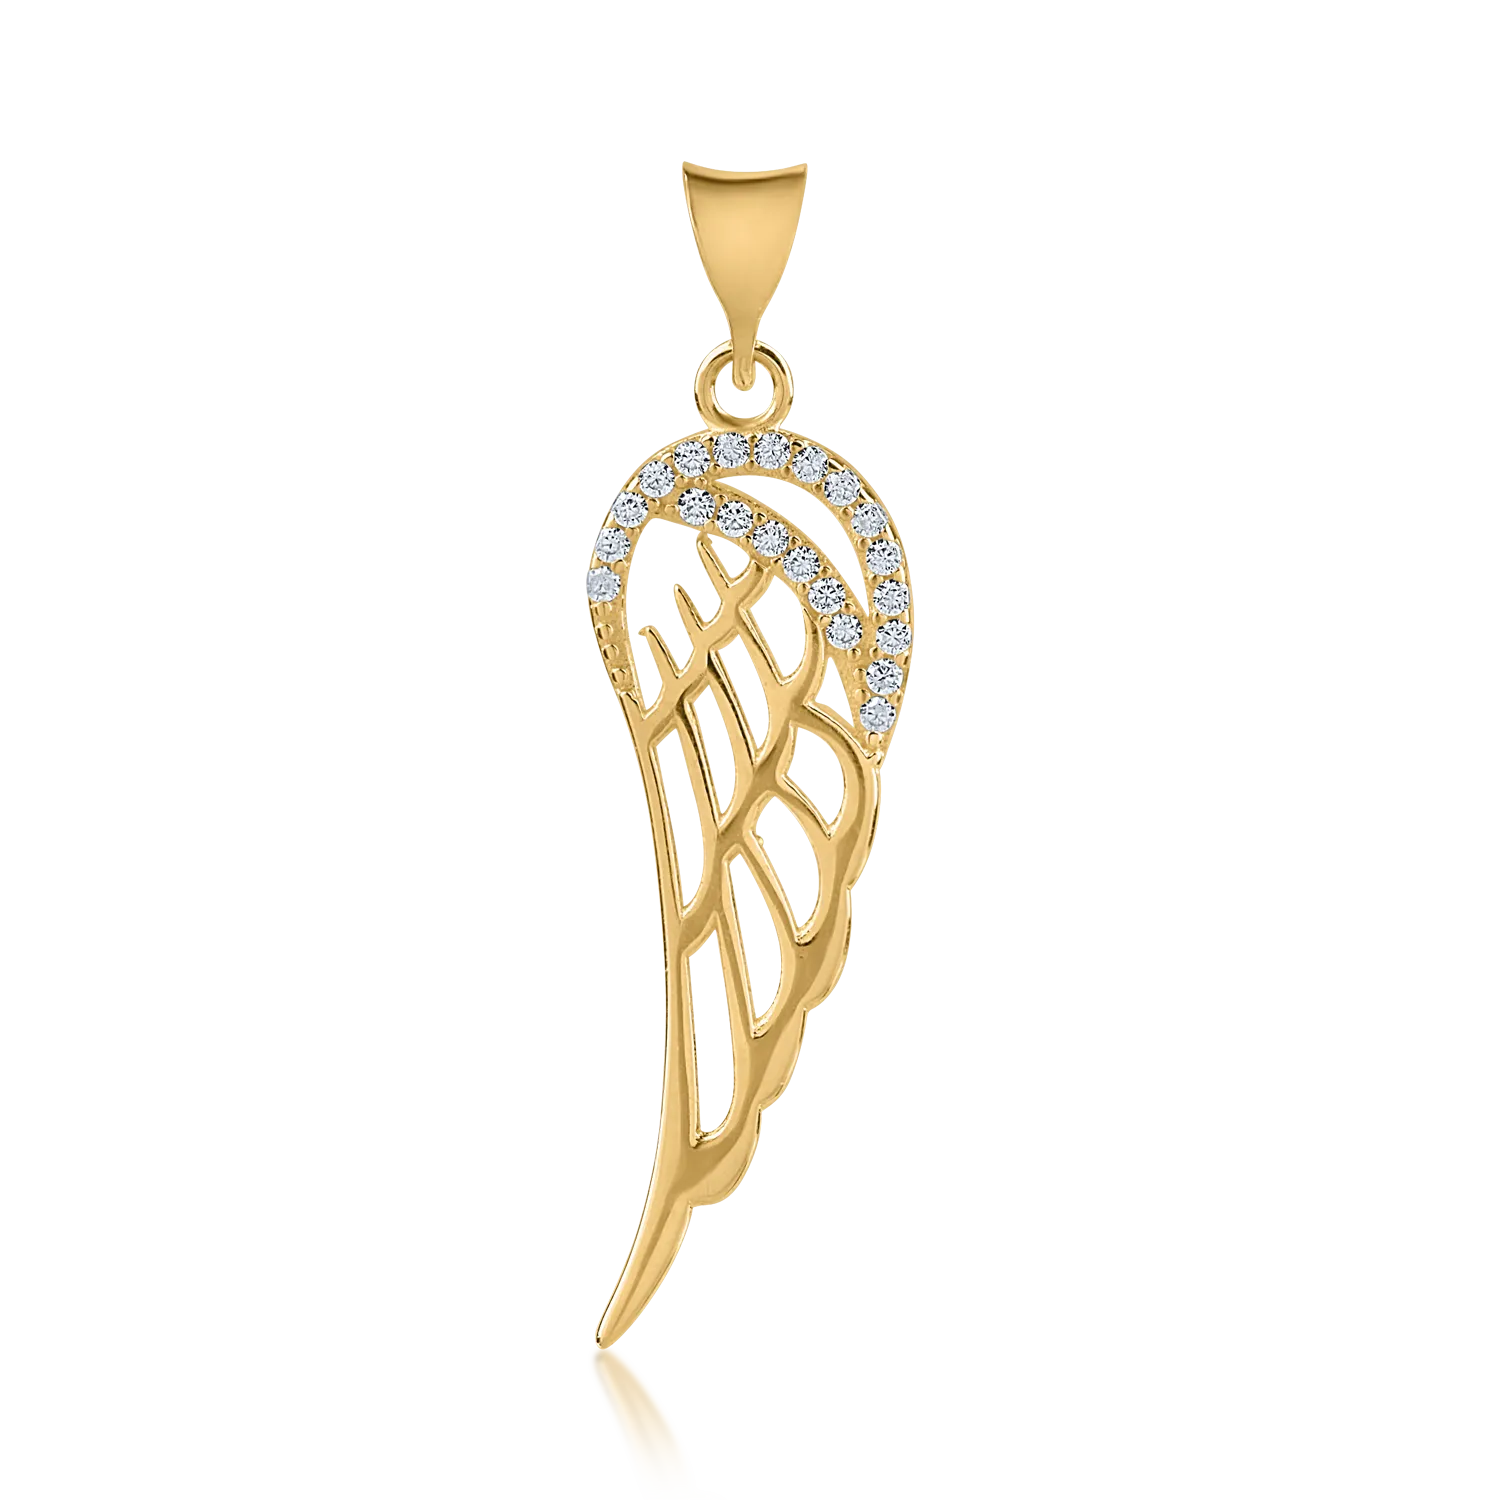 Yellow gold angel wing pendant